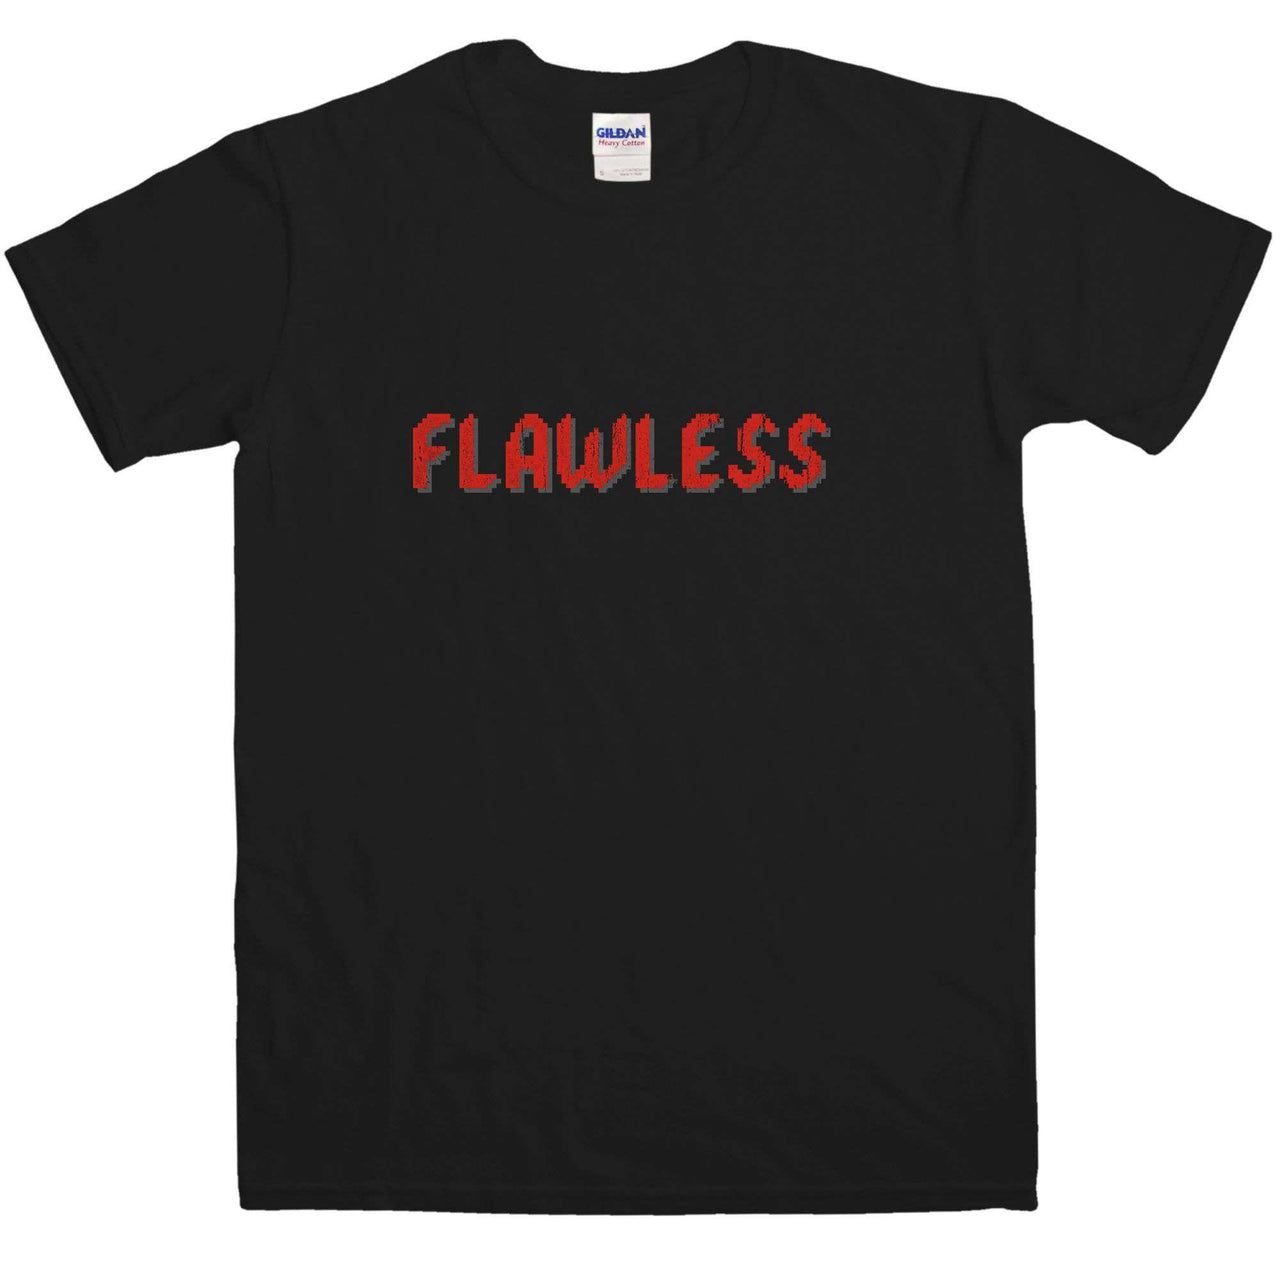 Flawless Unisex T-Shirt For Men And Women 8Ball